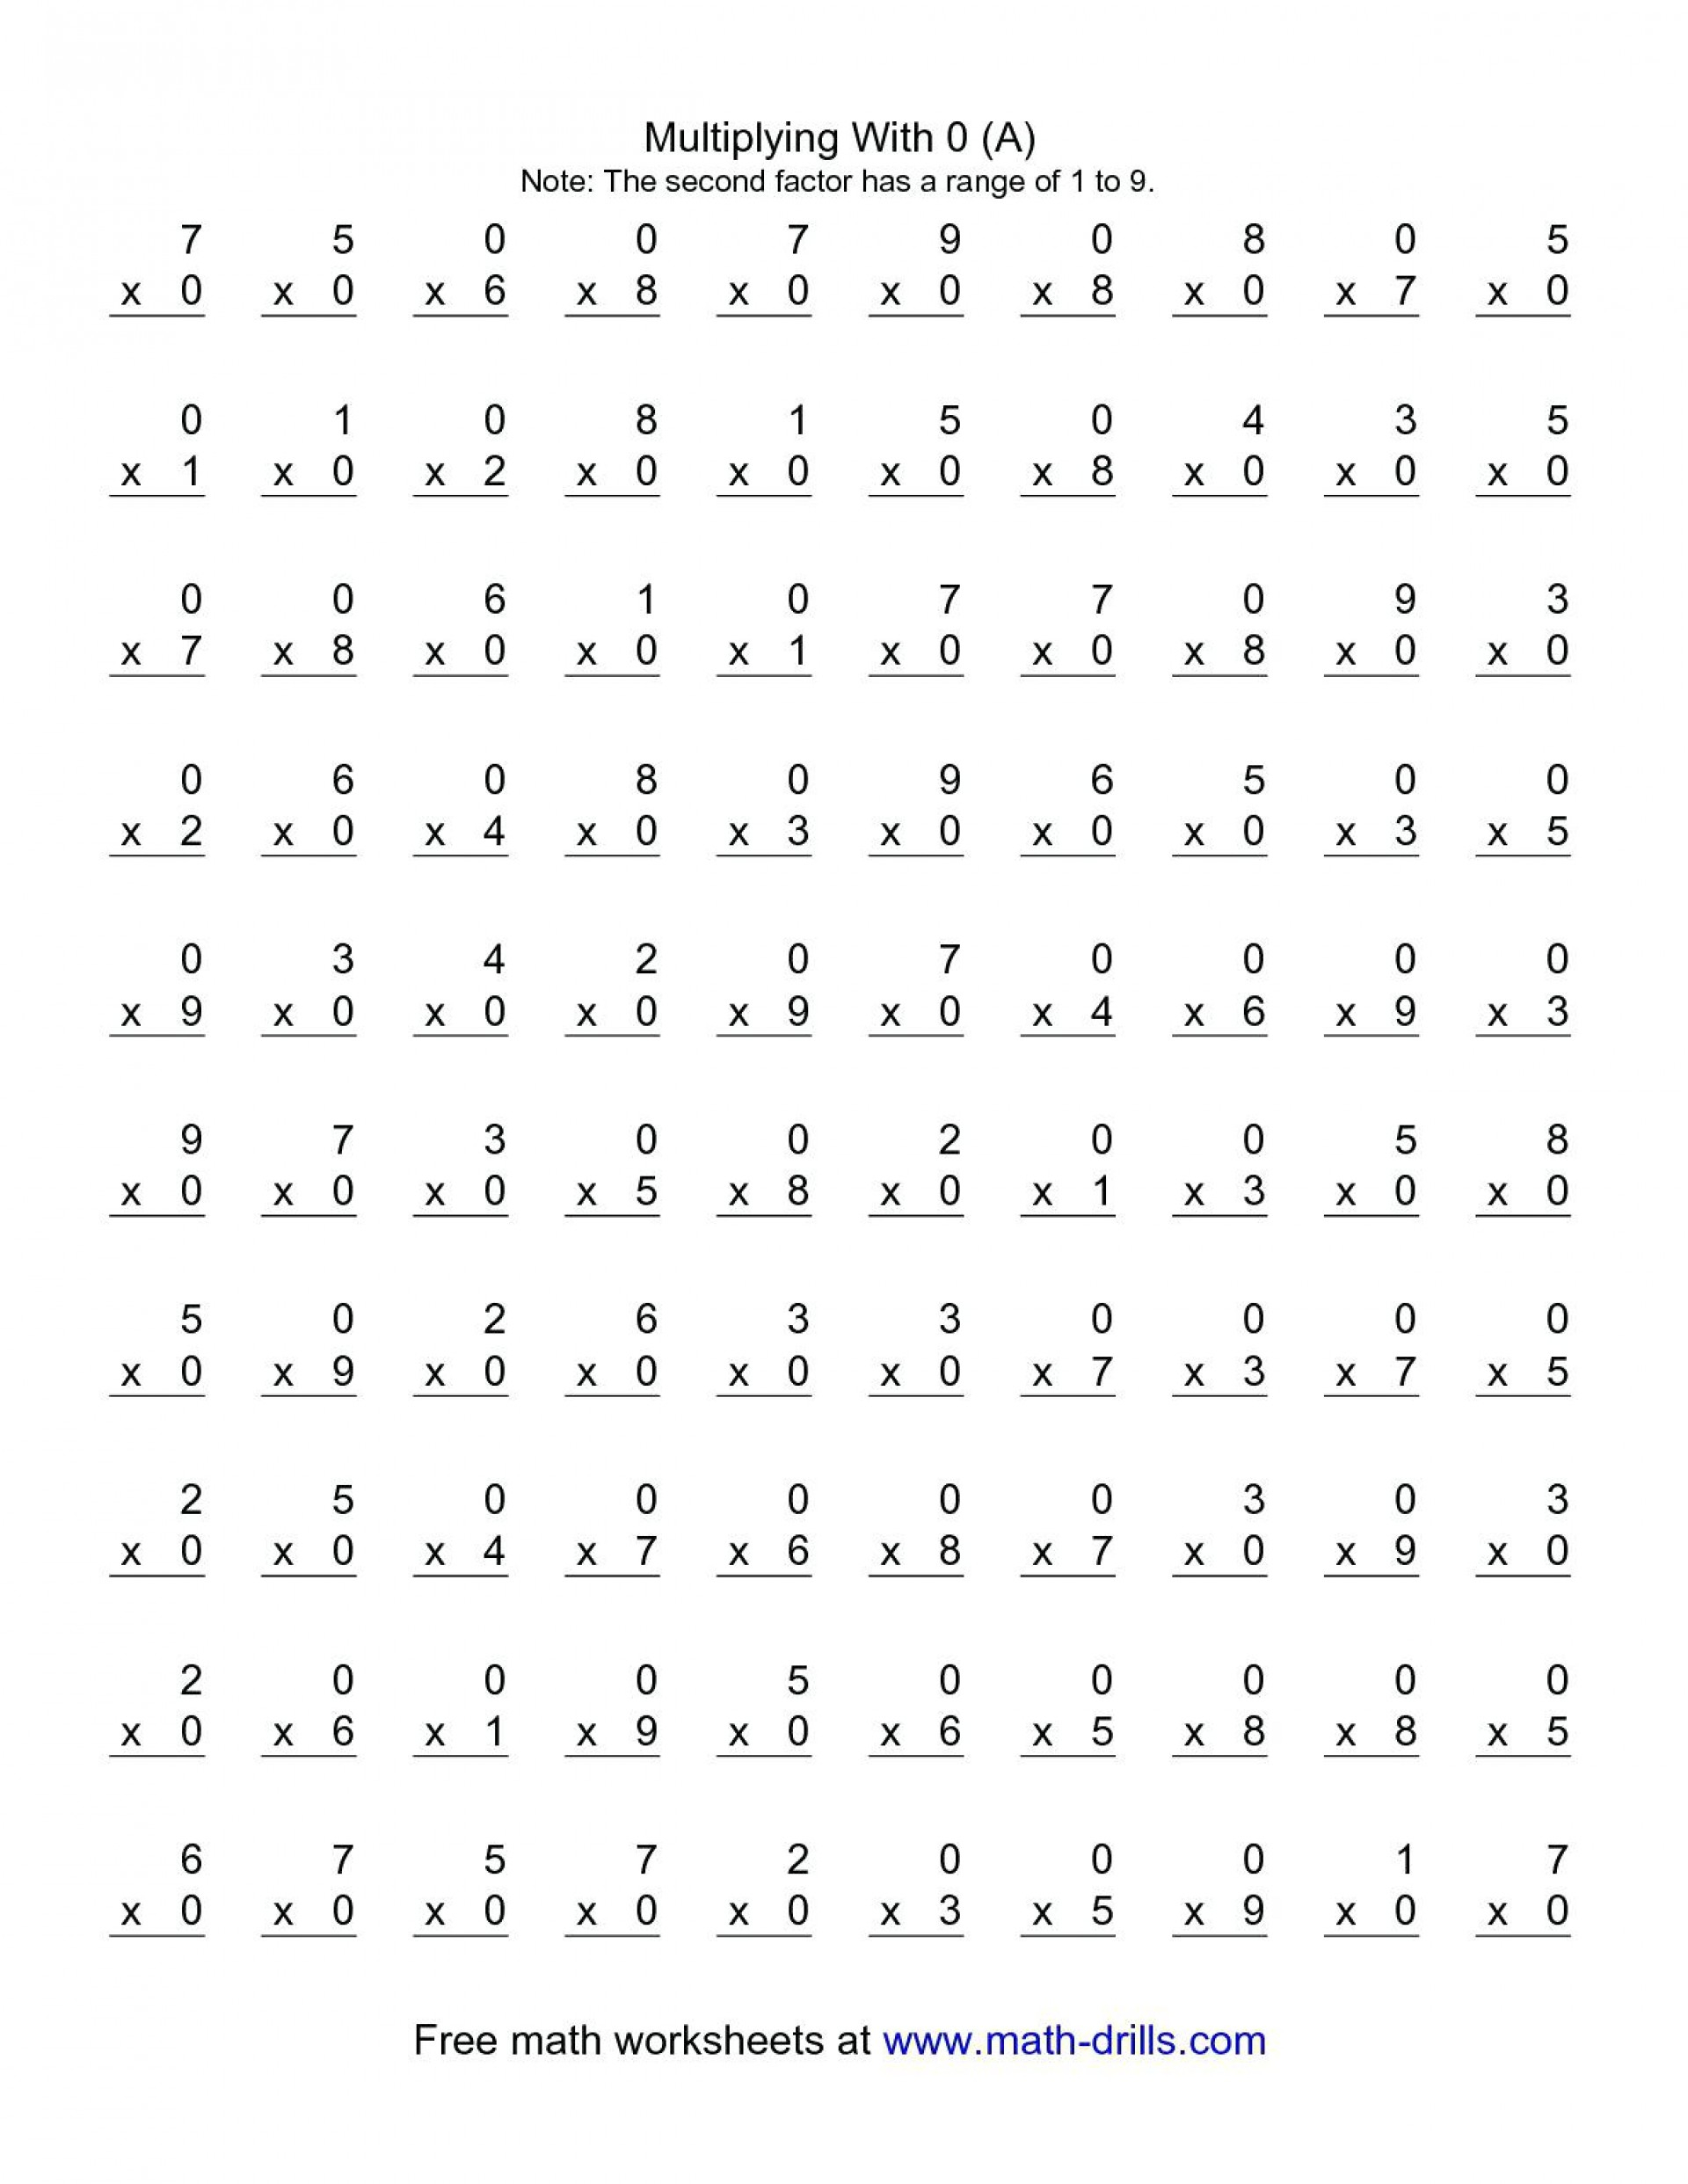 multiplication-x1-worksheet-multiplication-practice-packet-1x1-2x1-2x2-3x1-3x2-3x3-4x1-4x2